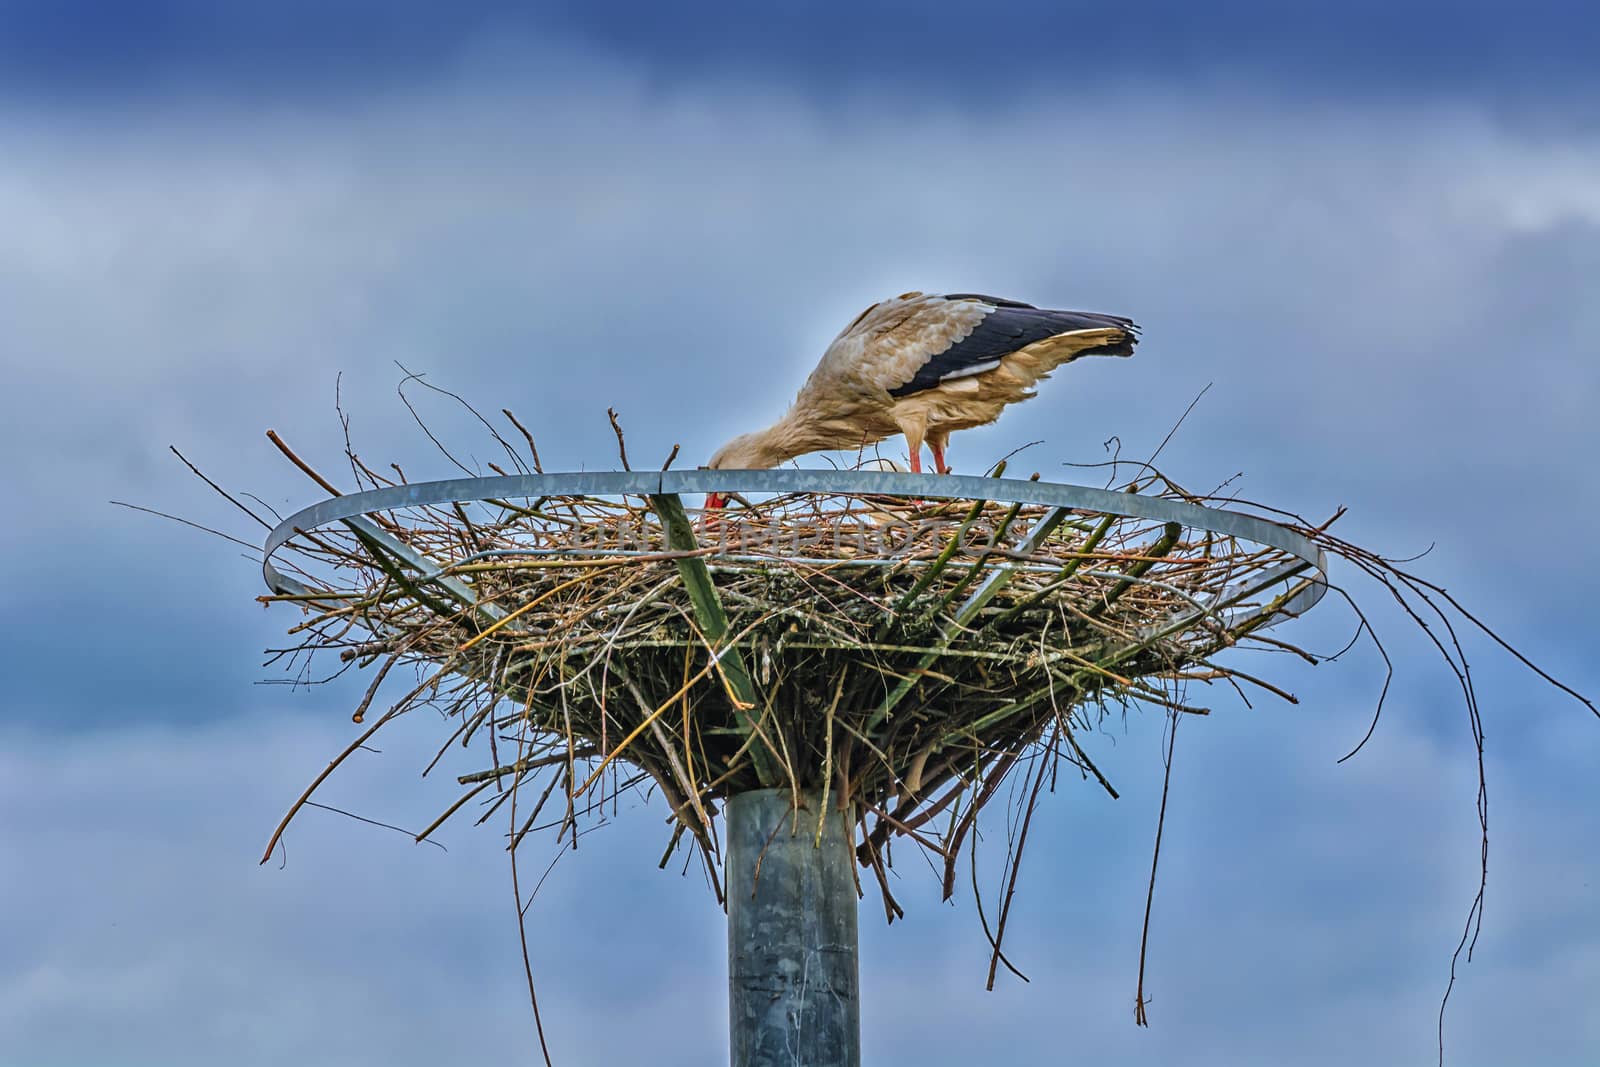 Storks nest building by JFsPic